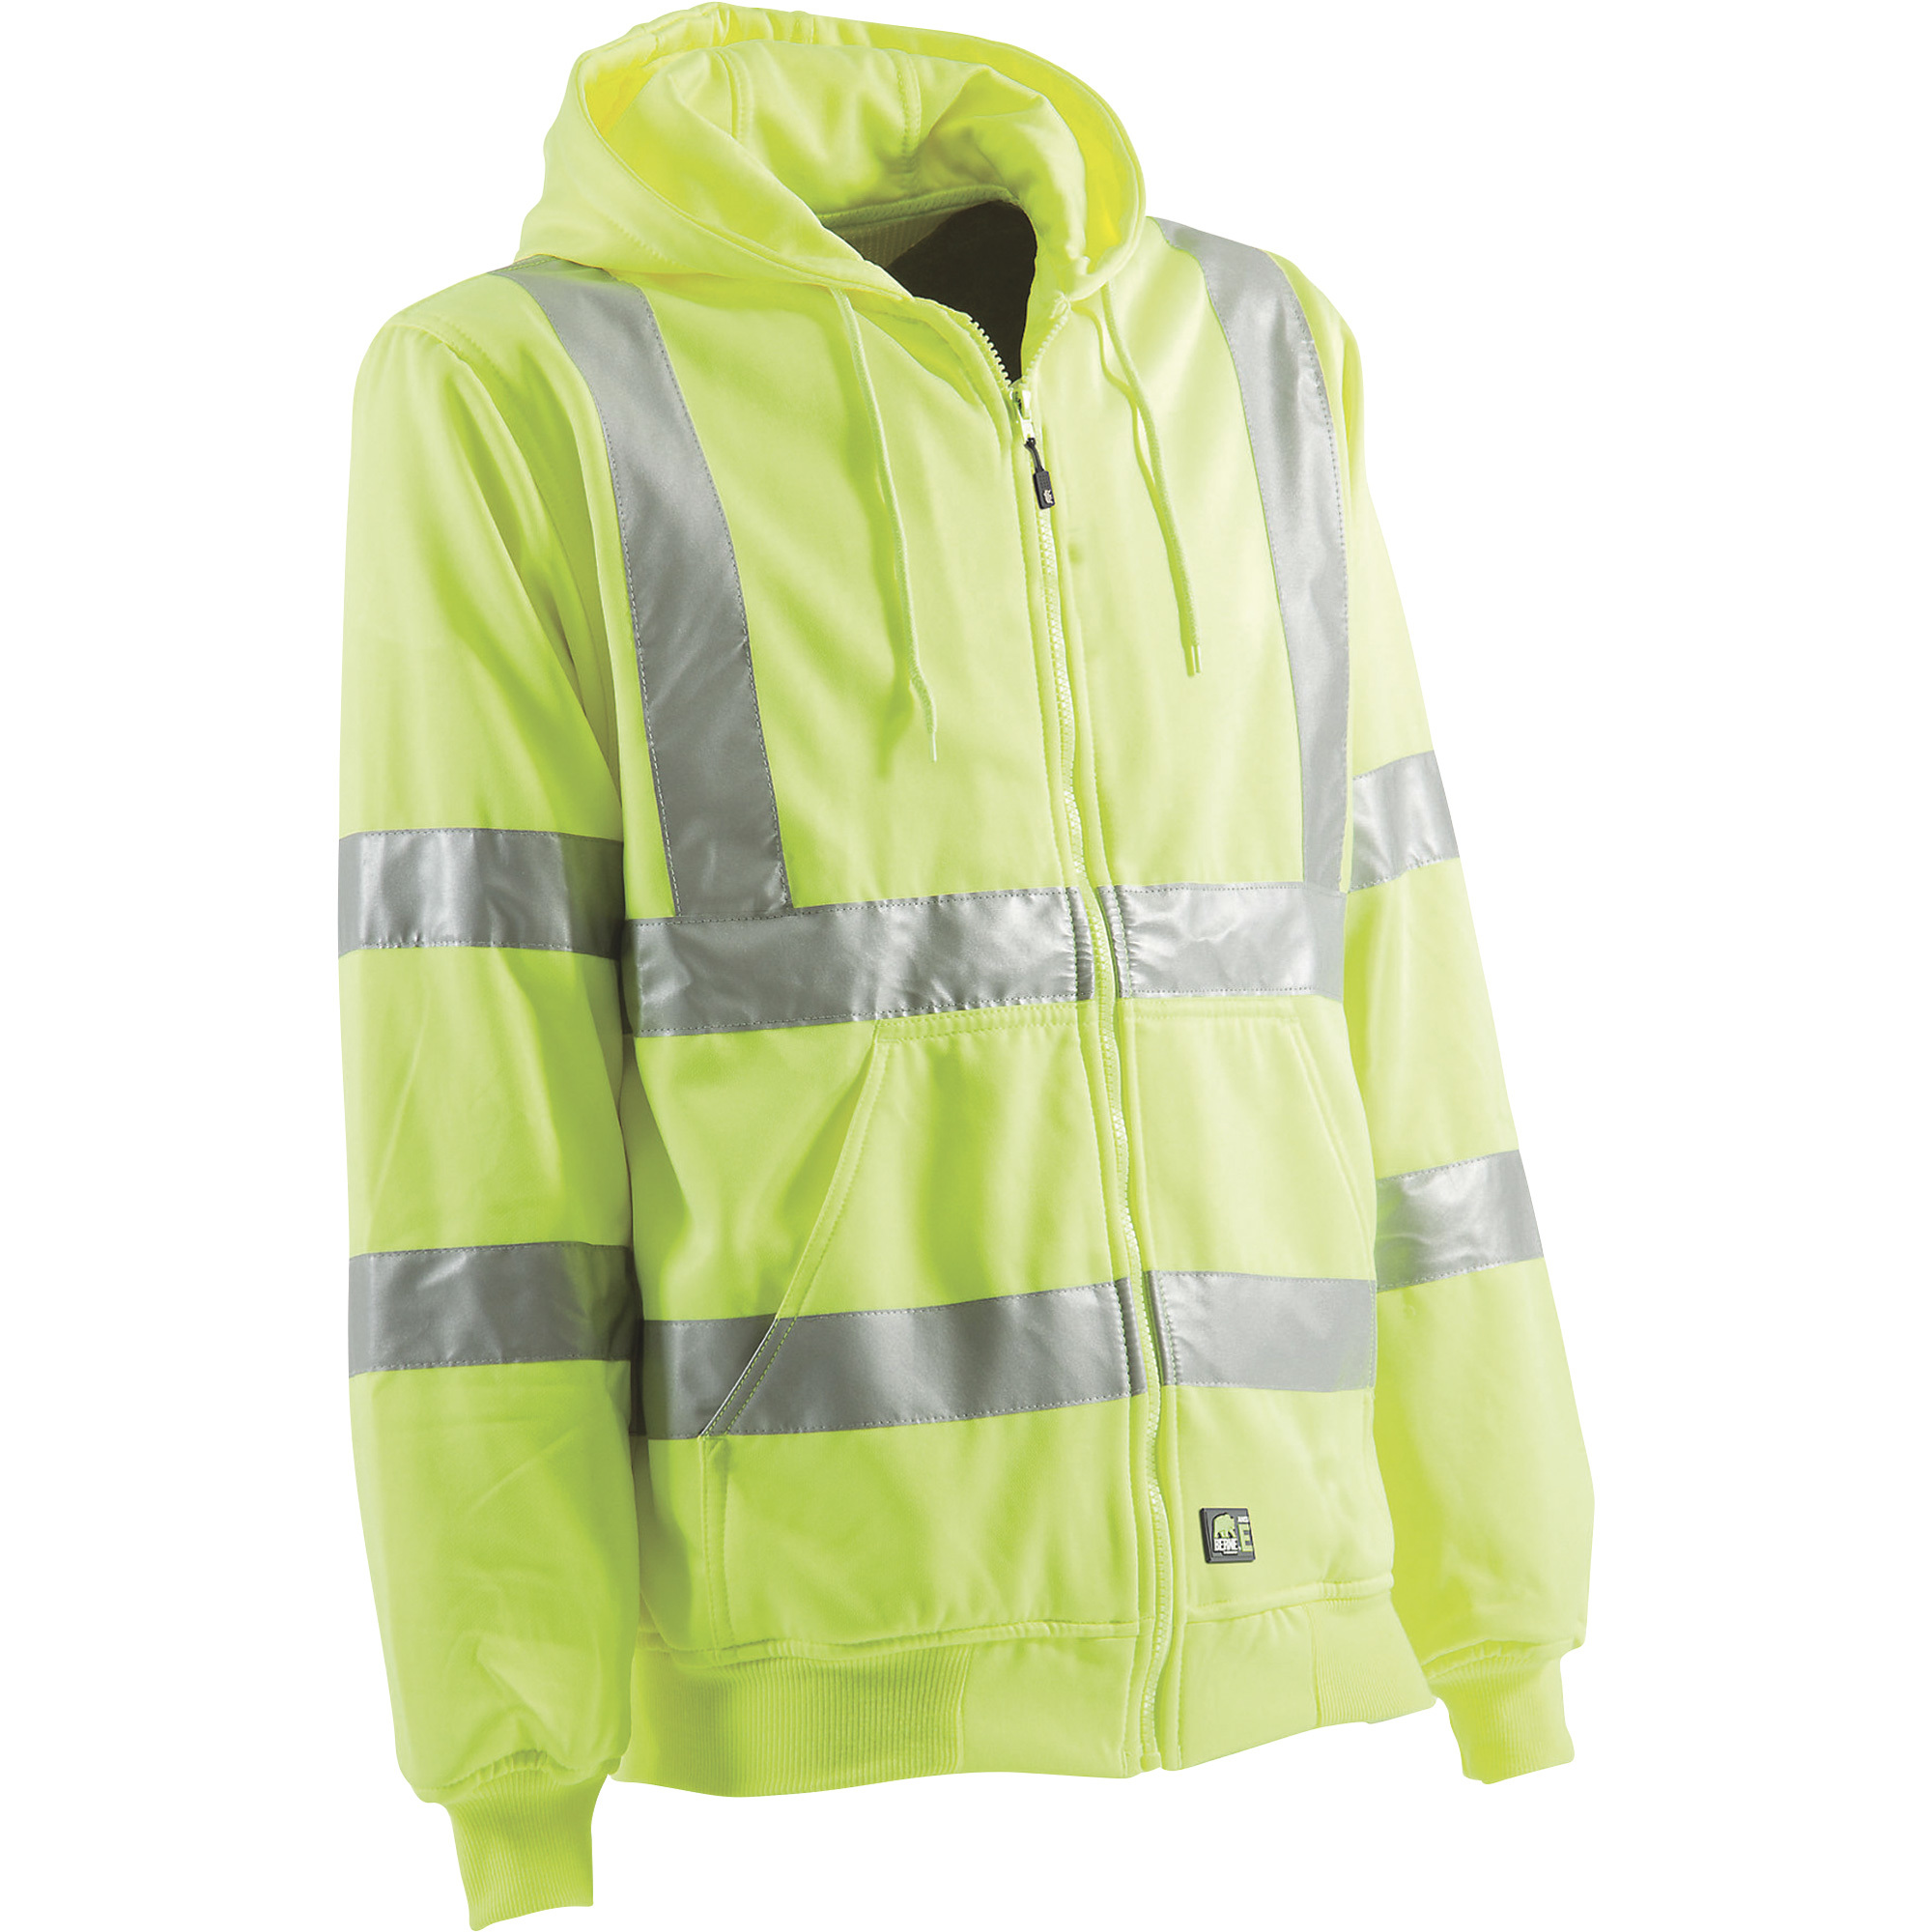 Berne Men's Class 3 High Visibility Hooded Sweatshirt — Lime, Large/Tall, Model HVF021YWT440 -  Berne Apparel